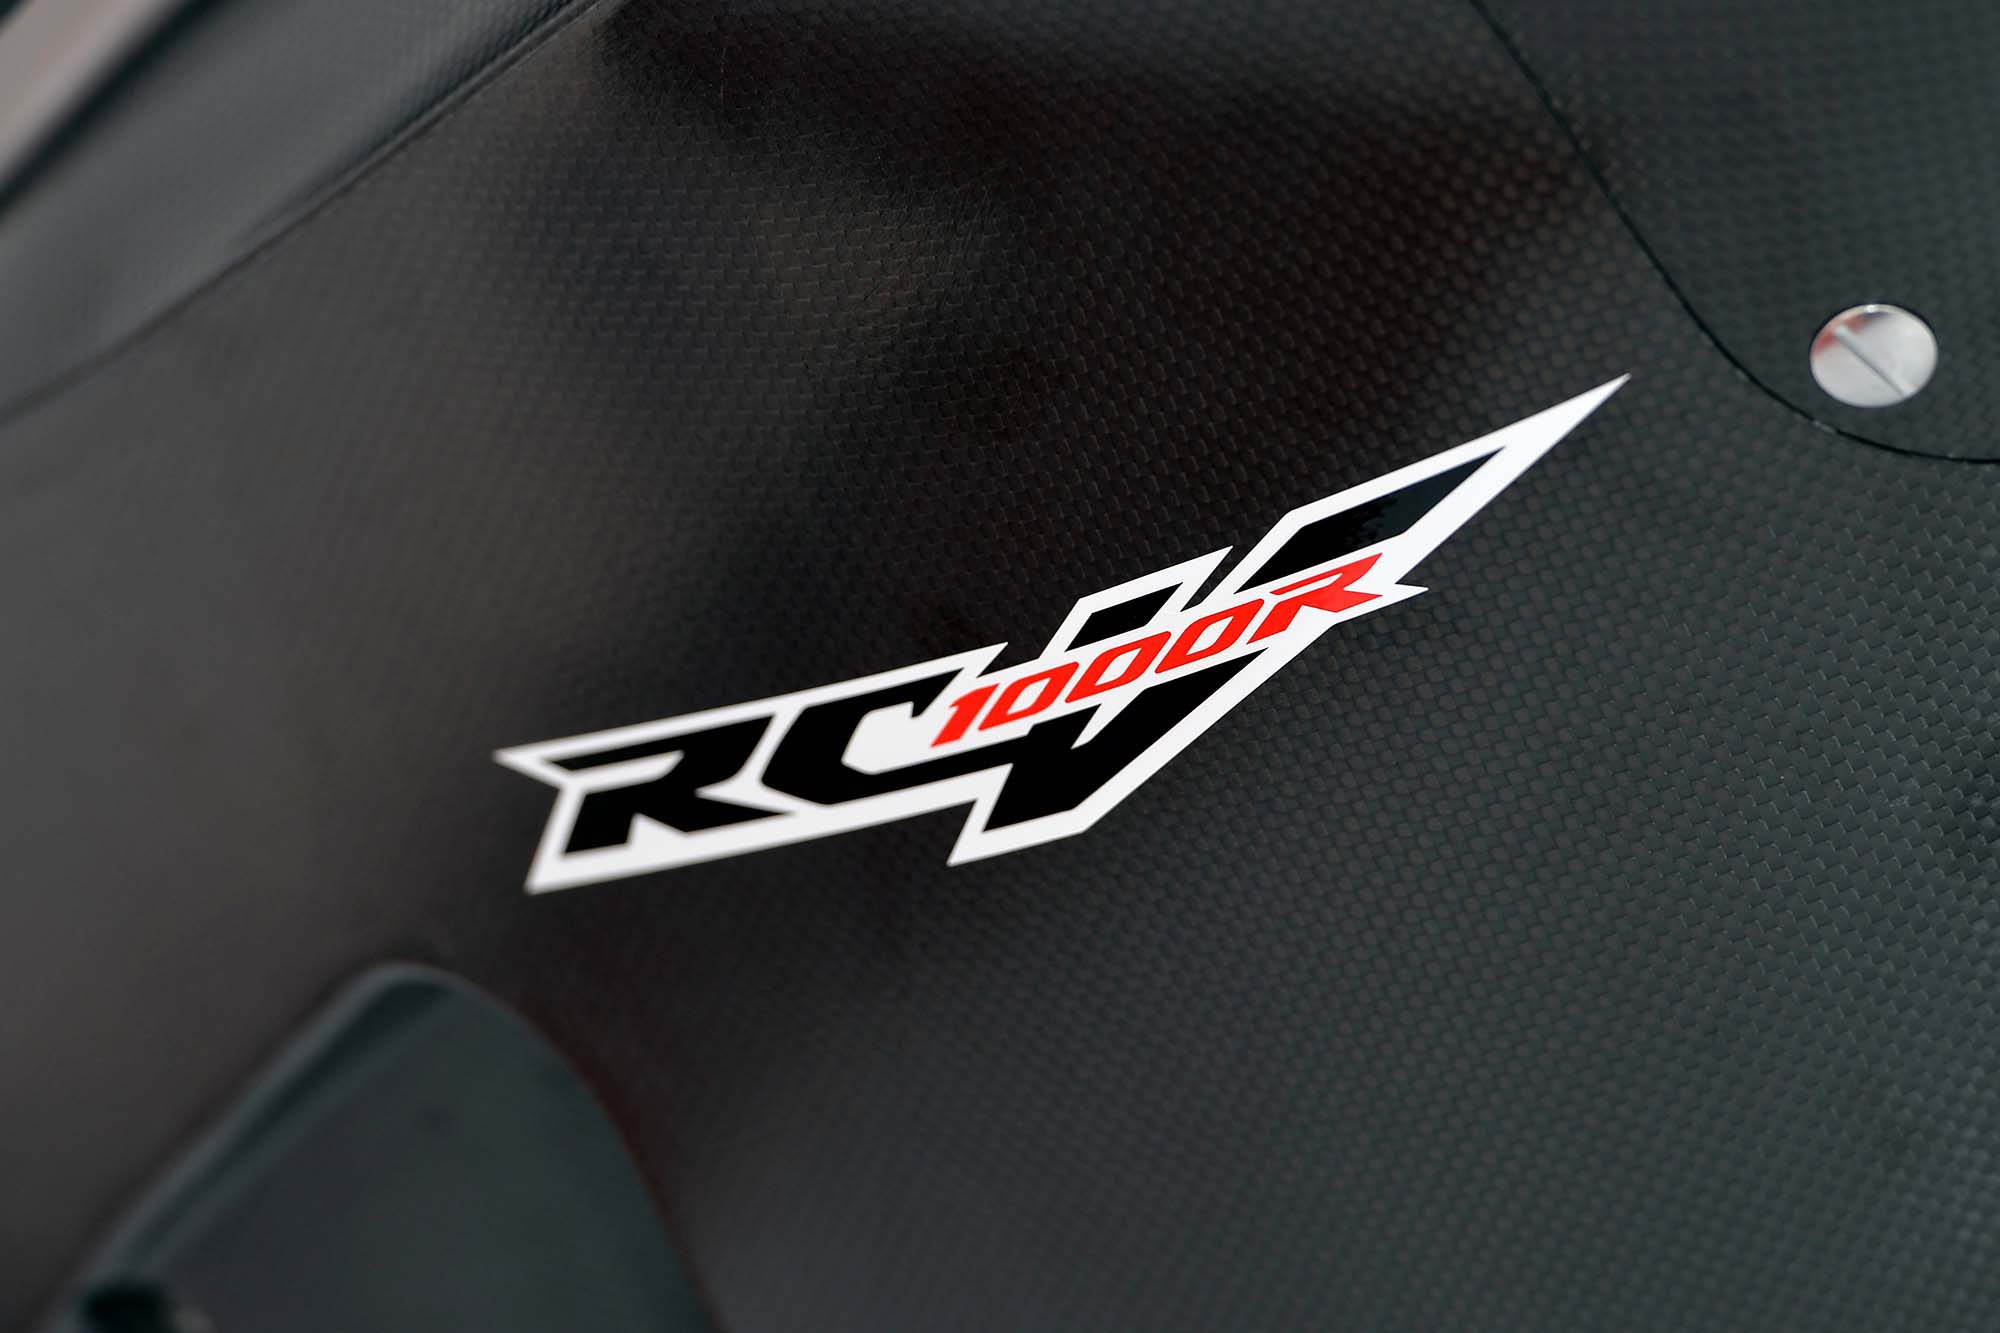 2014-Honda-RCV1000R-MotoGP-05.jpg